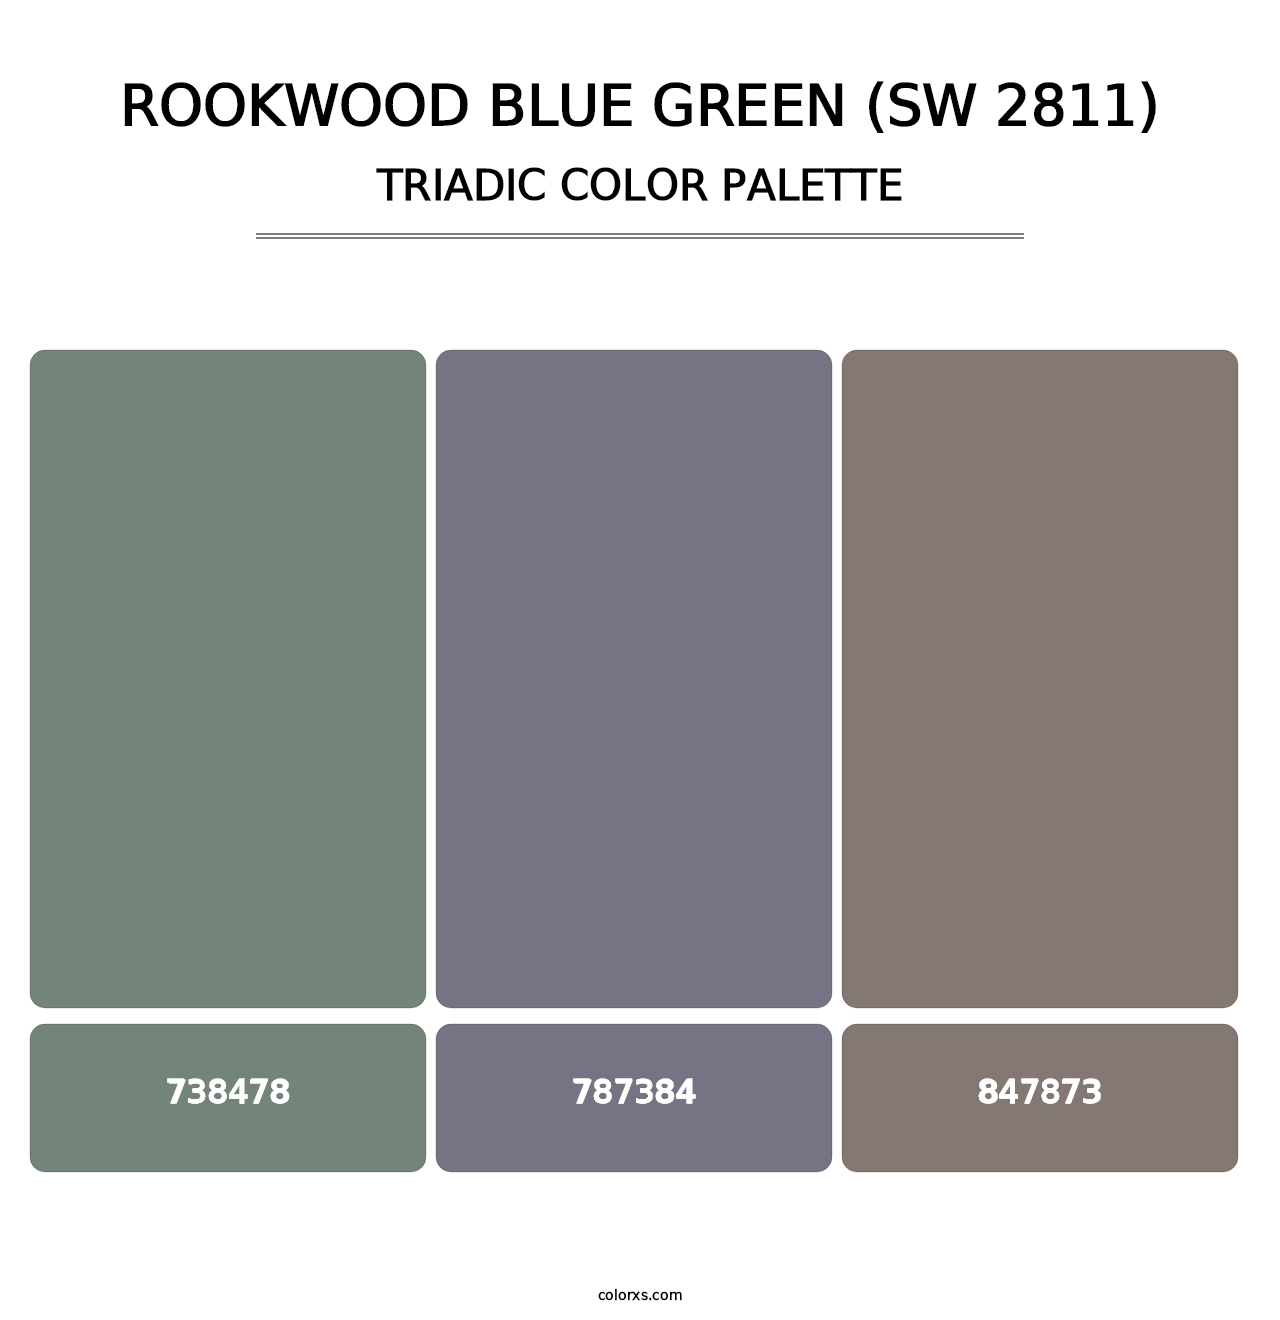 Rookwood Blue Green (SW 2811) - Triadic Color Palette